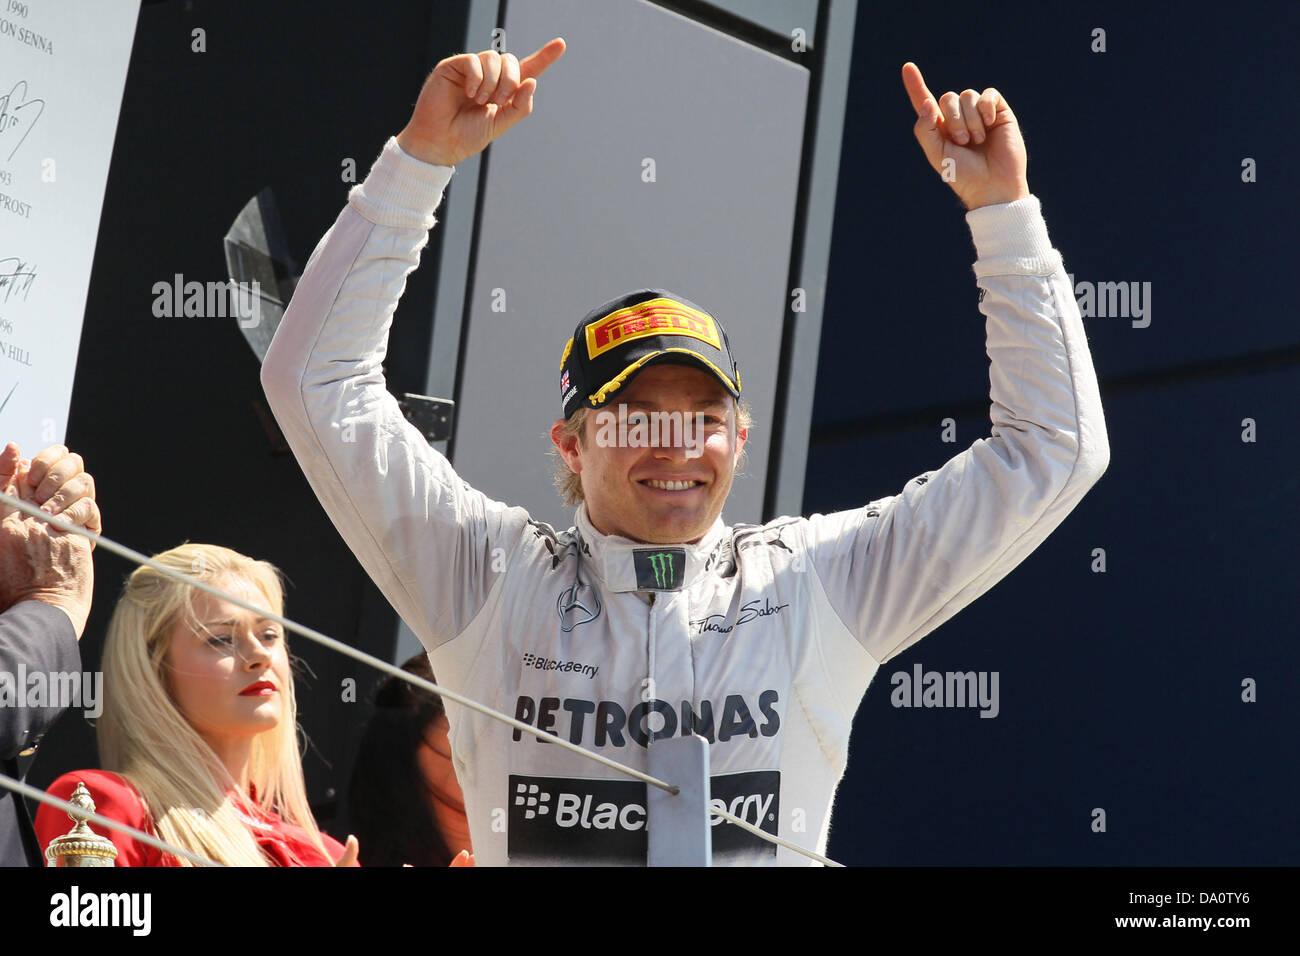 Silverstone, UK. 30th June, 2013. Silverstone Circuit, England. Nico Rosberg celebrates his win at the British GP Stock Photo